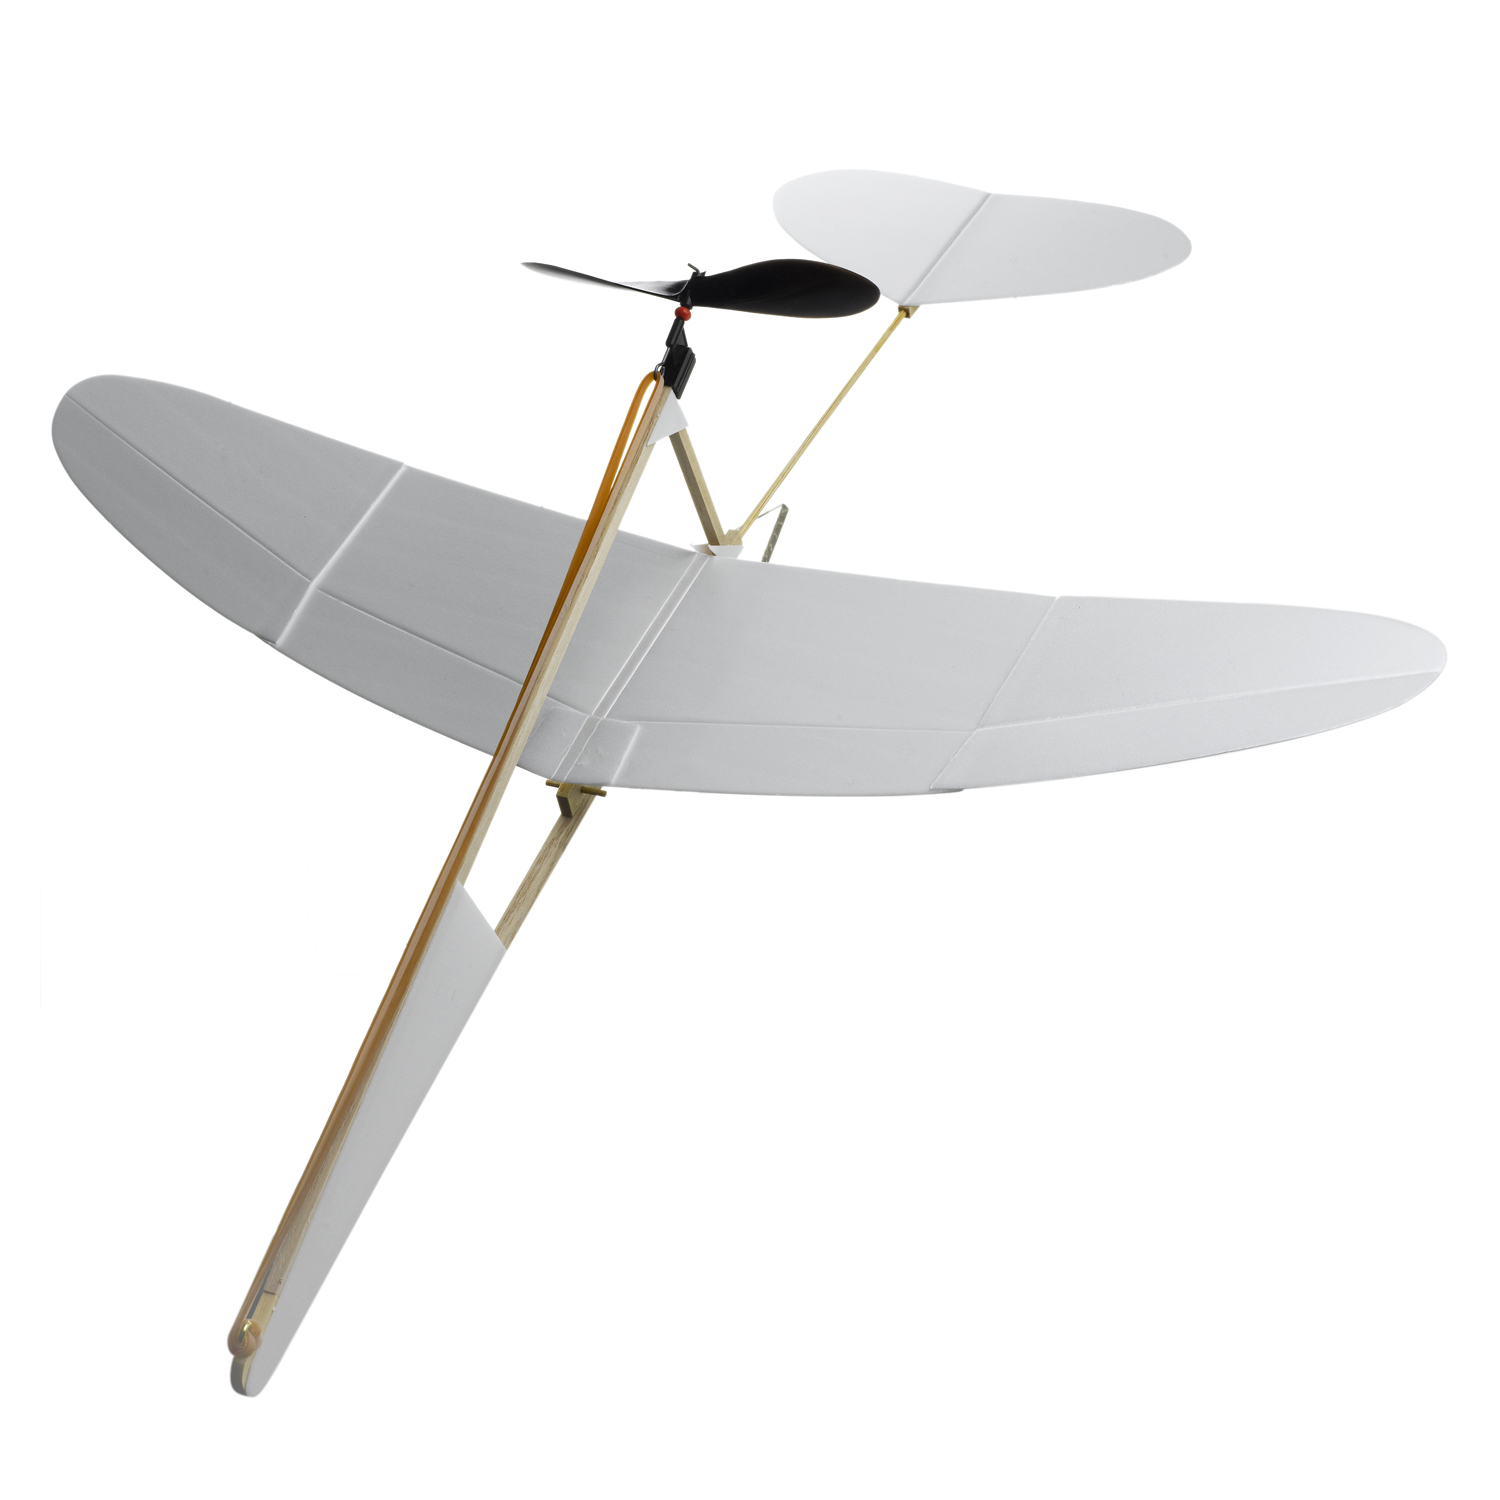 Crow model airplane propelled by rubber band. Design: Chuhachi Ninomiya